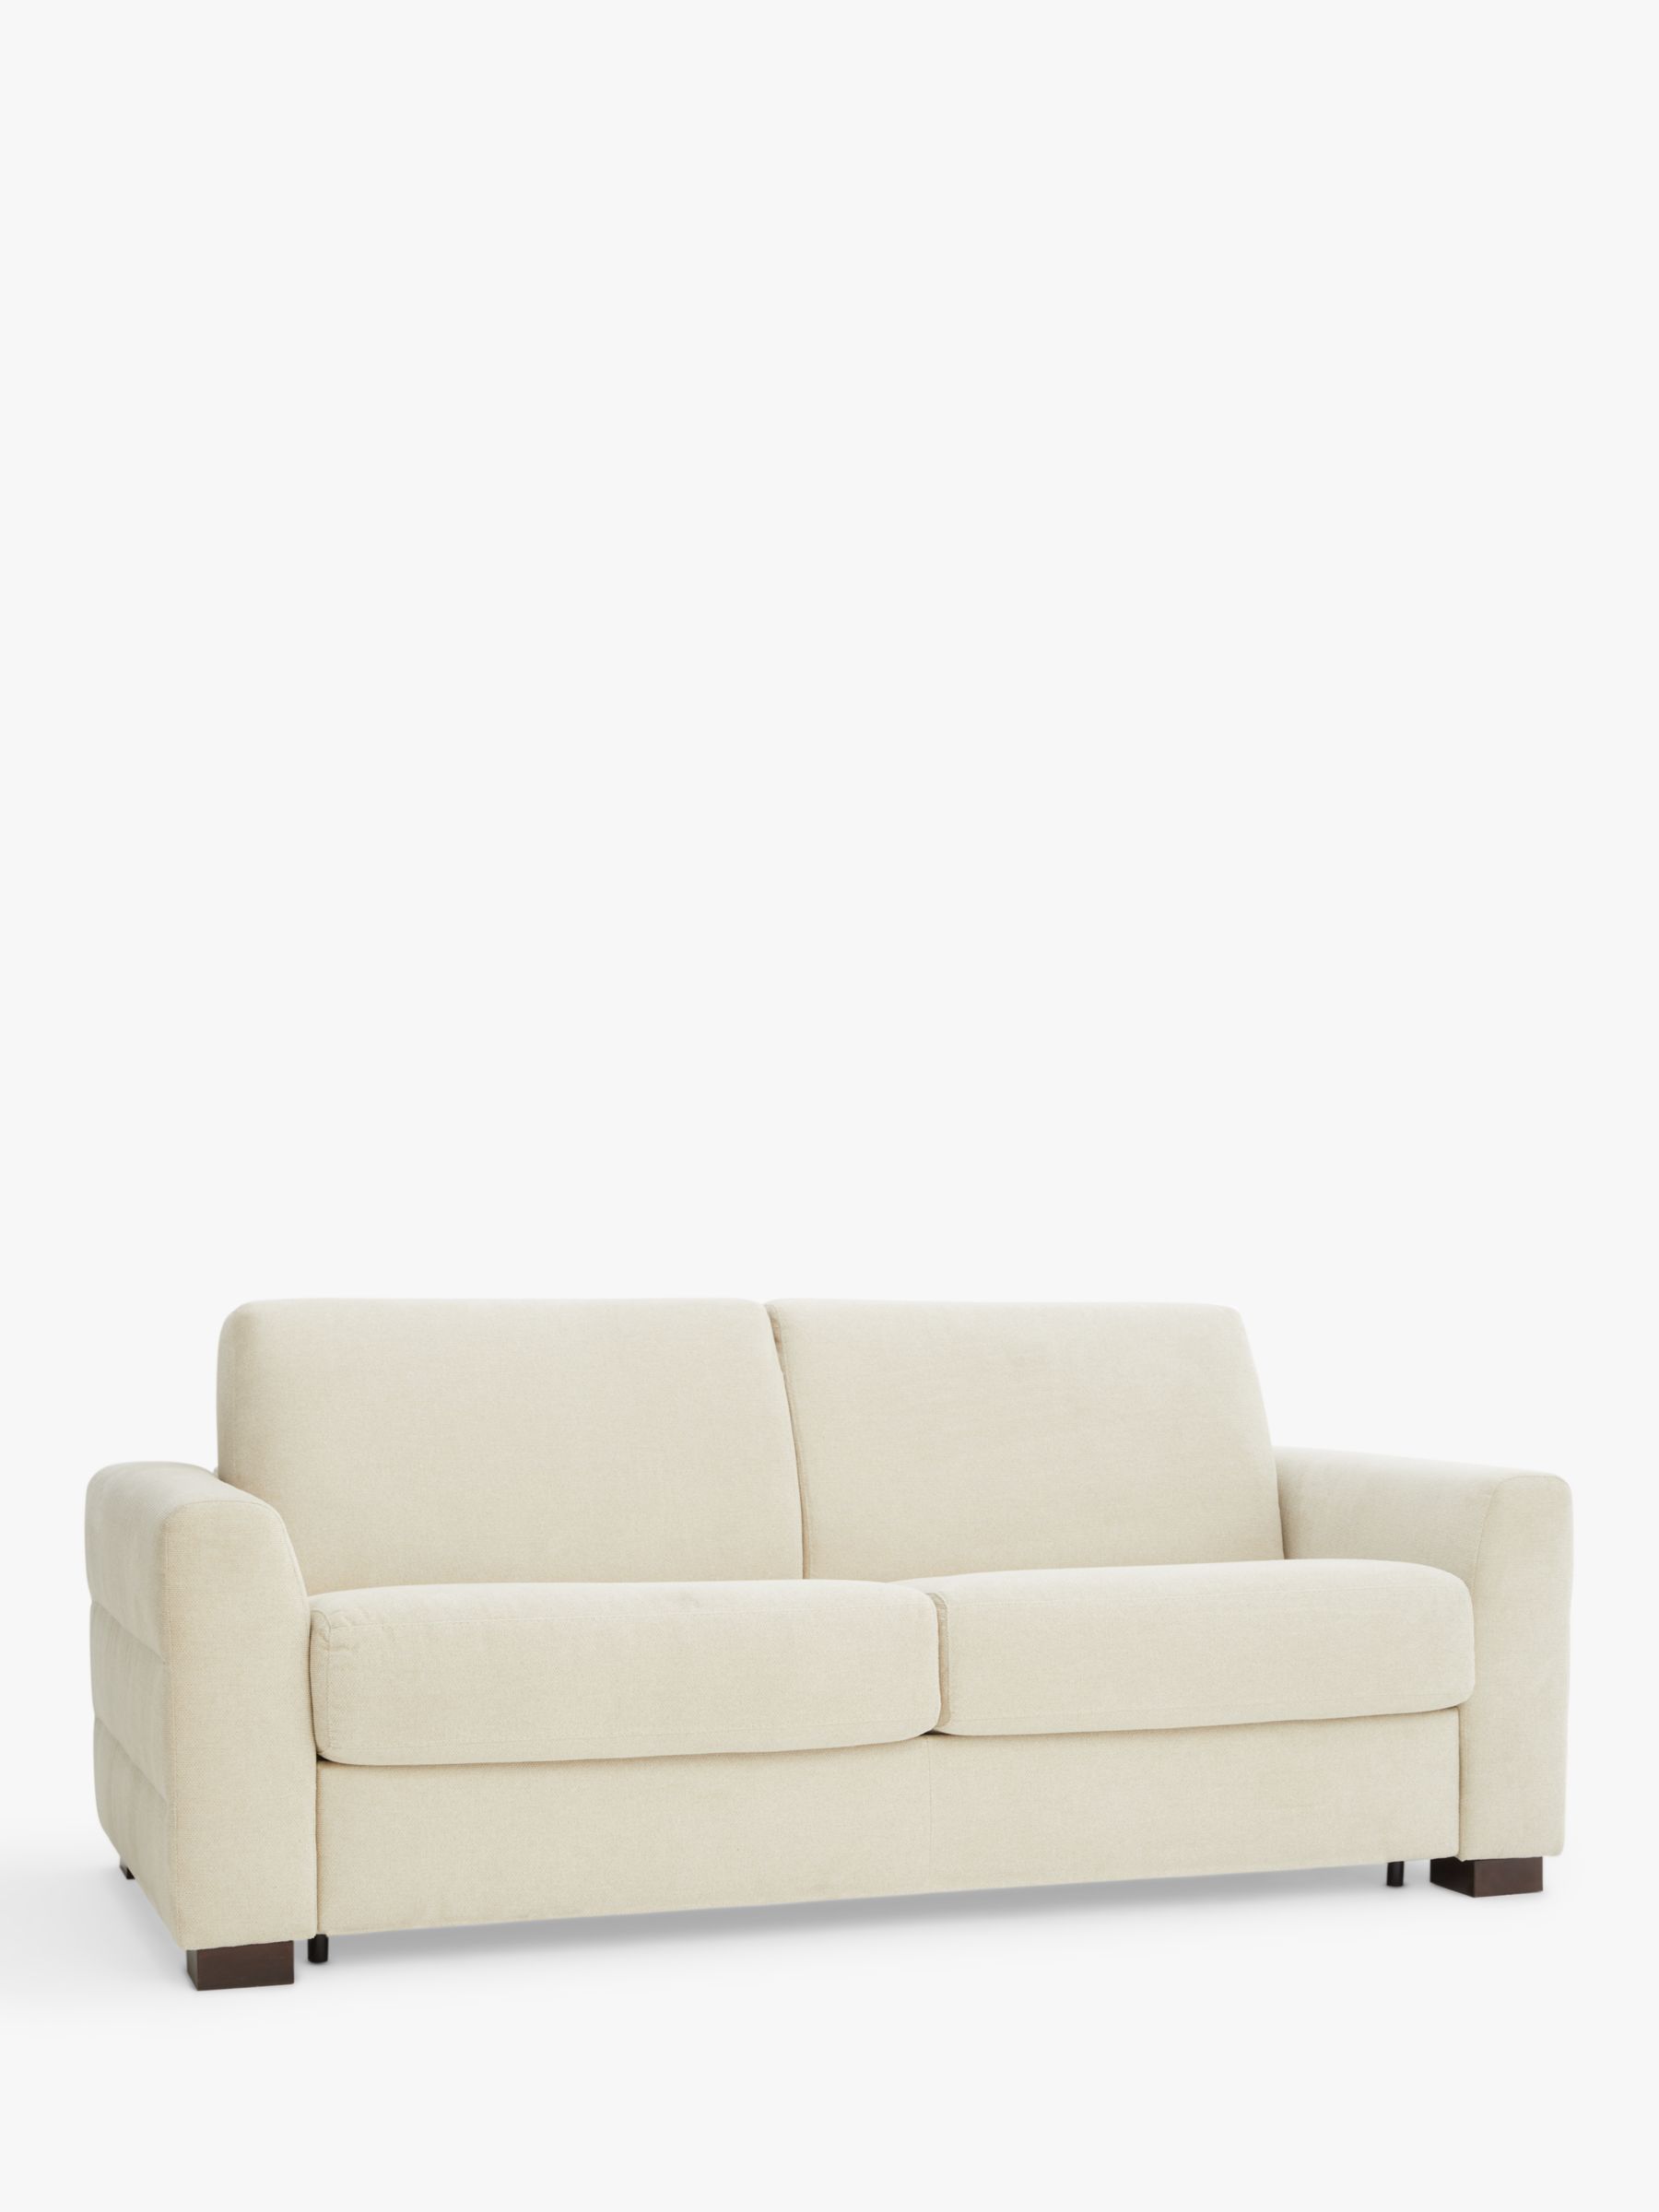 Slumber Range, John Lewis Slumber Large 3 Seater Sofa Bed, Dark Leg, Easy Clean Natural Weave